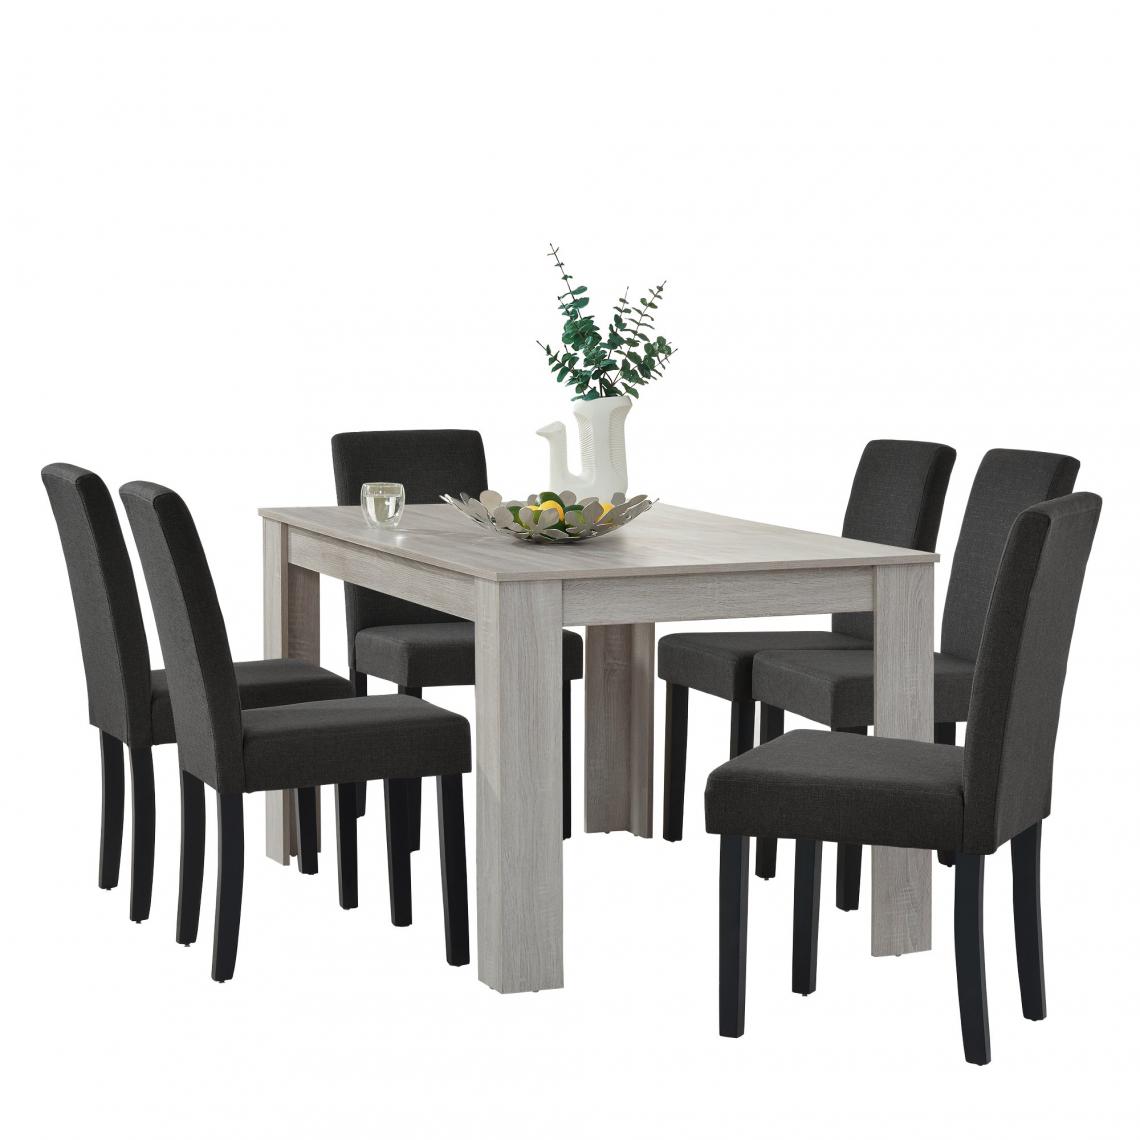 Helloshop26 - Table de salle à manger (chêne) + 6 chaise de salle à manger en gris foncé - 140 x 90cm 03_0004240 - Tables à manger